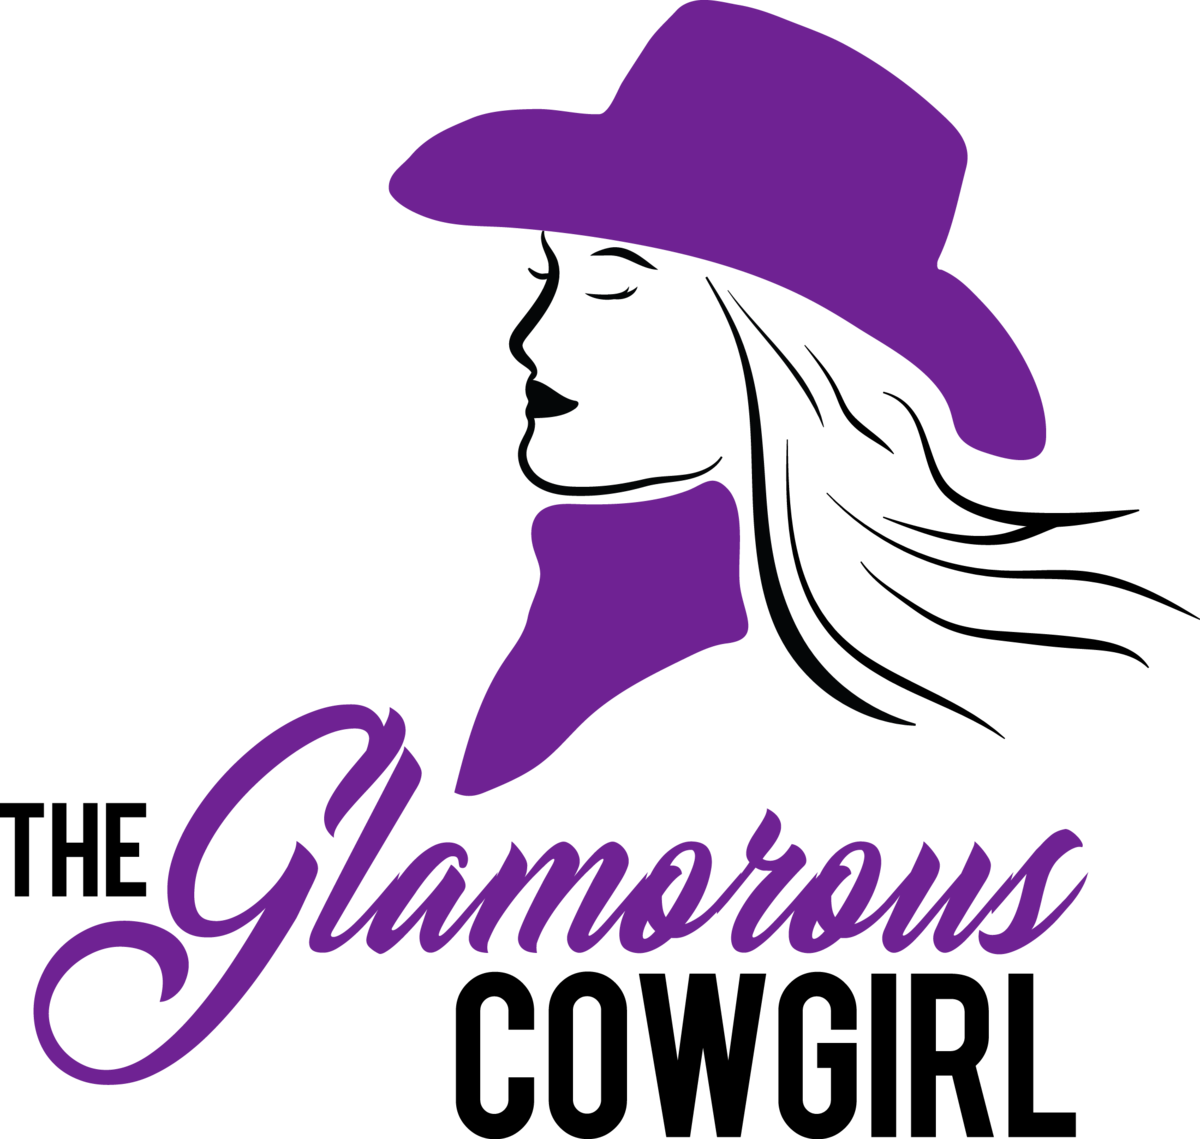 A Logo Of A Woman Wearing A Hat